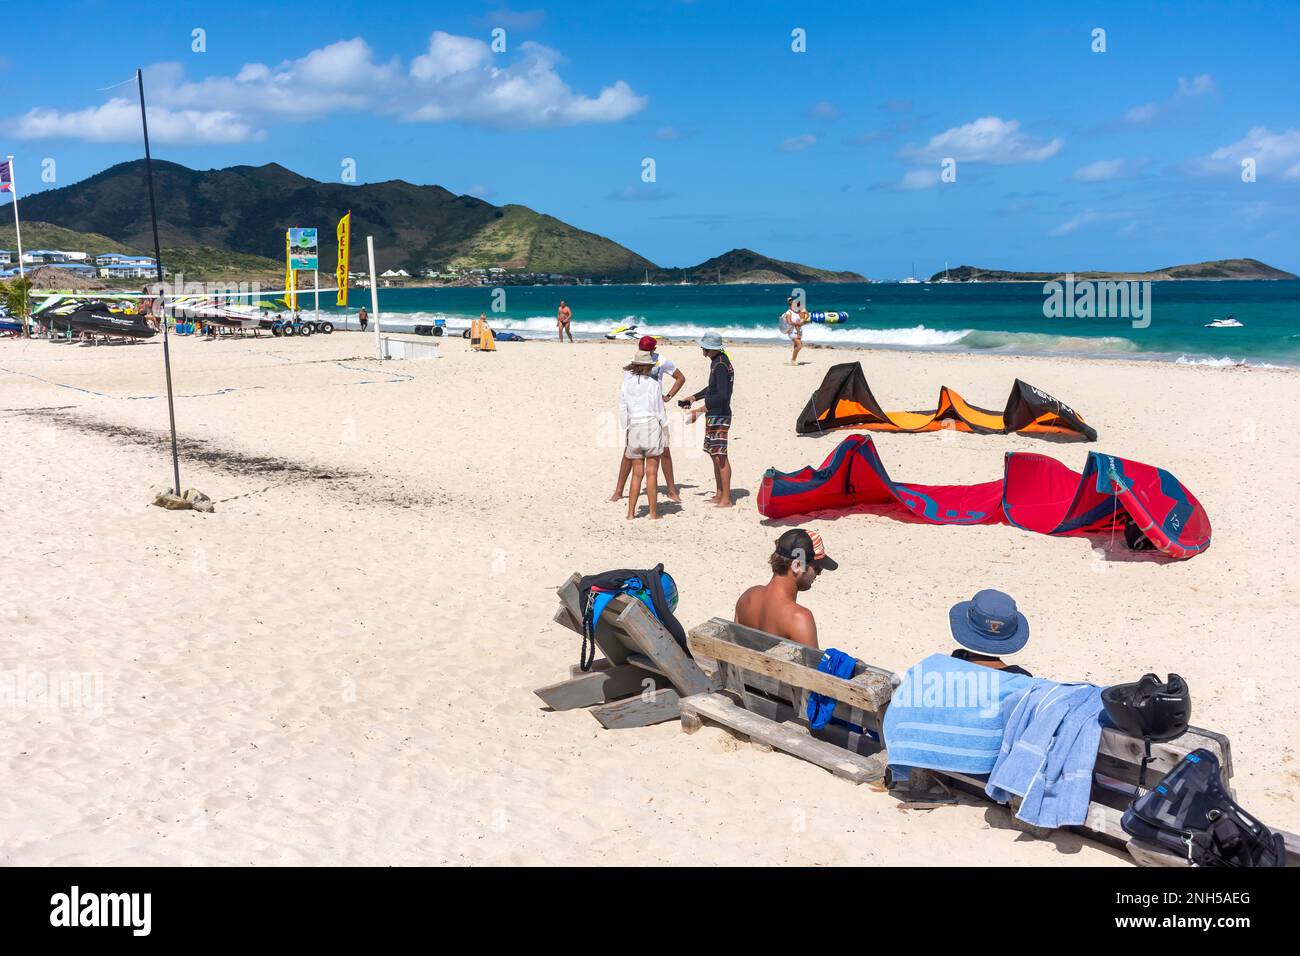 Kite surfers on beach, Orient Bay (Baie Orientale), St Martin (Saint-Martin), Lesser Antilles, Caribbean Stock Photo